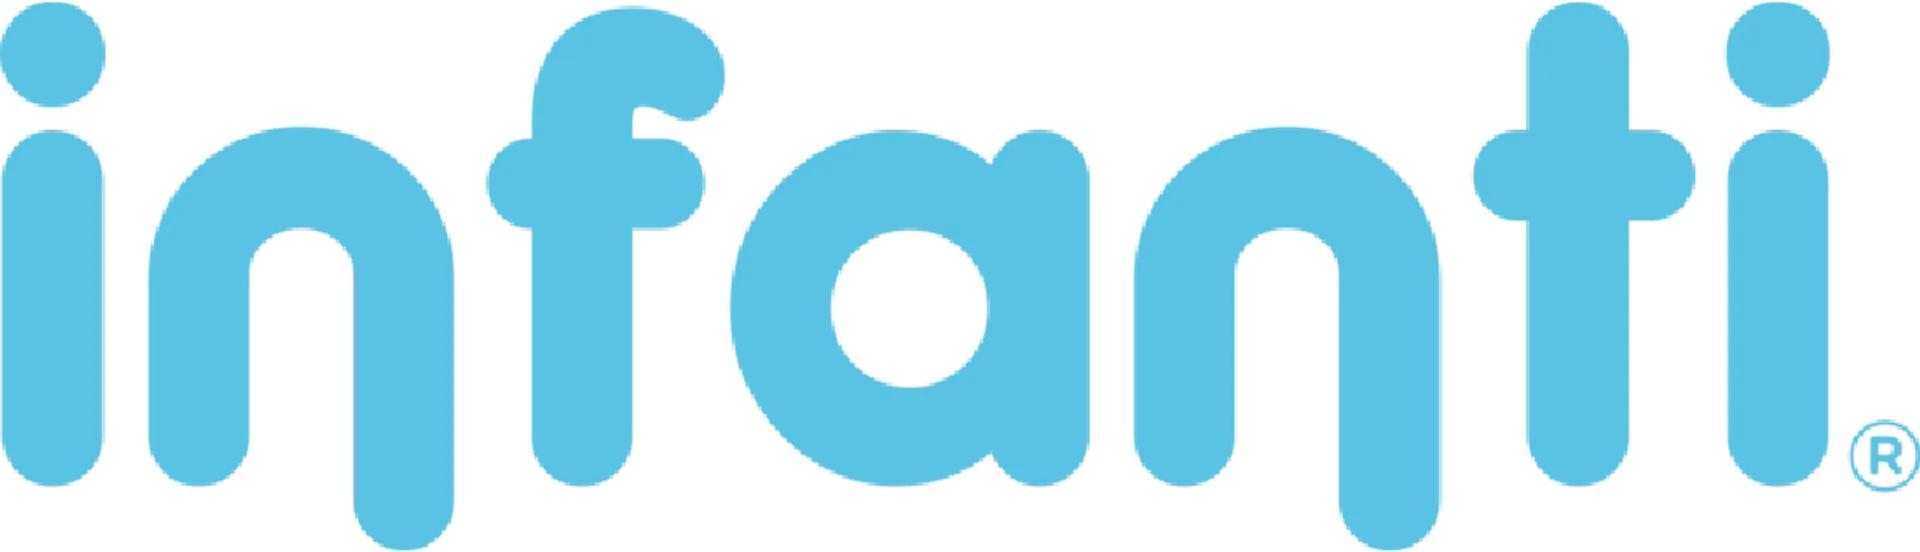 BABY INFANTI logo